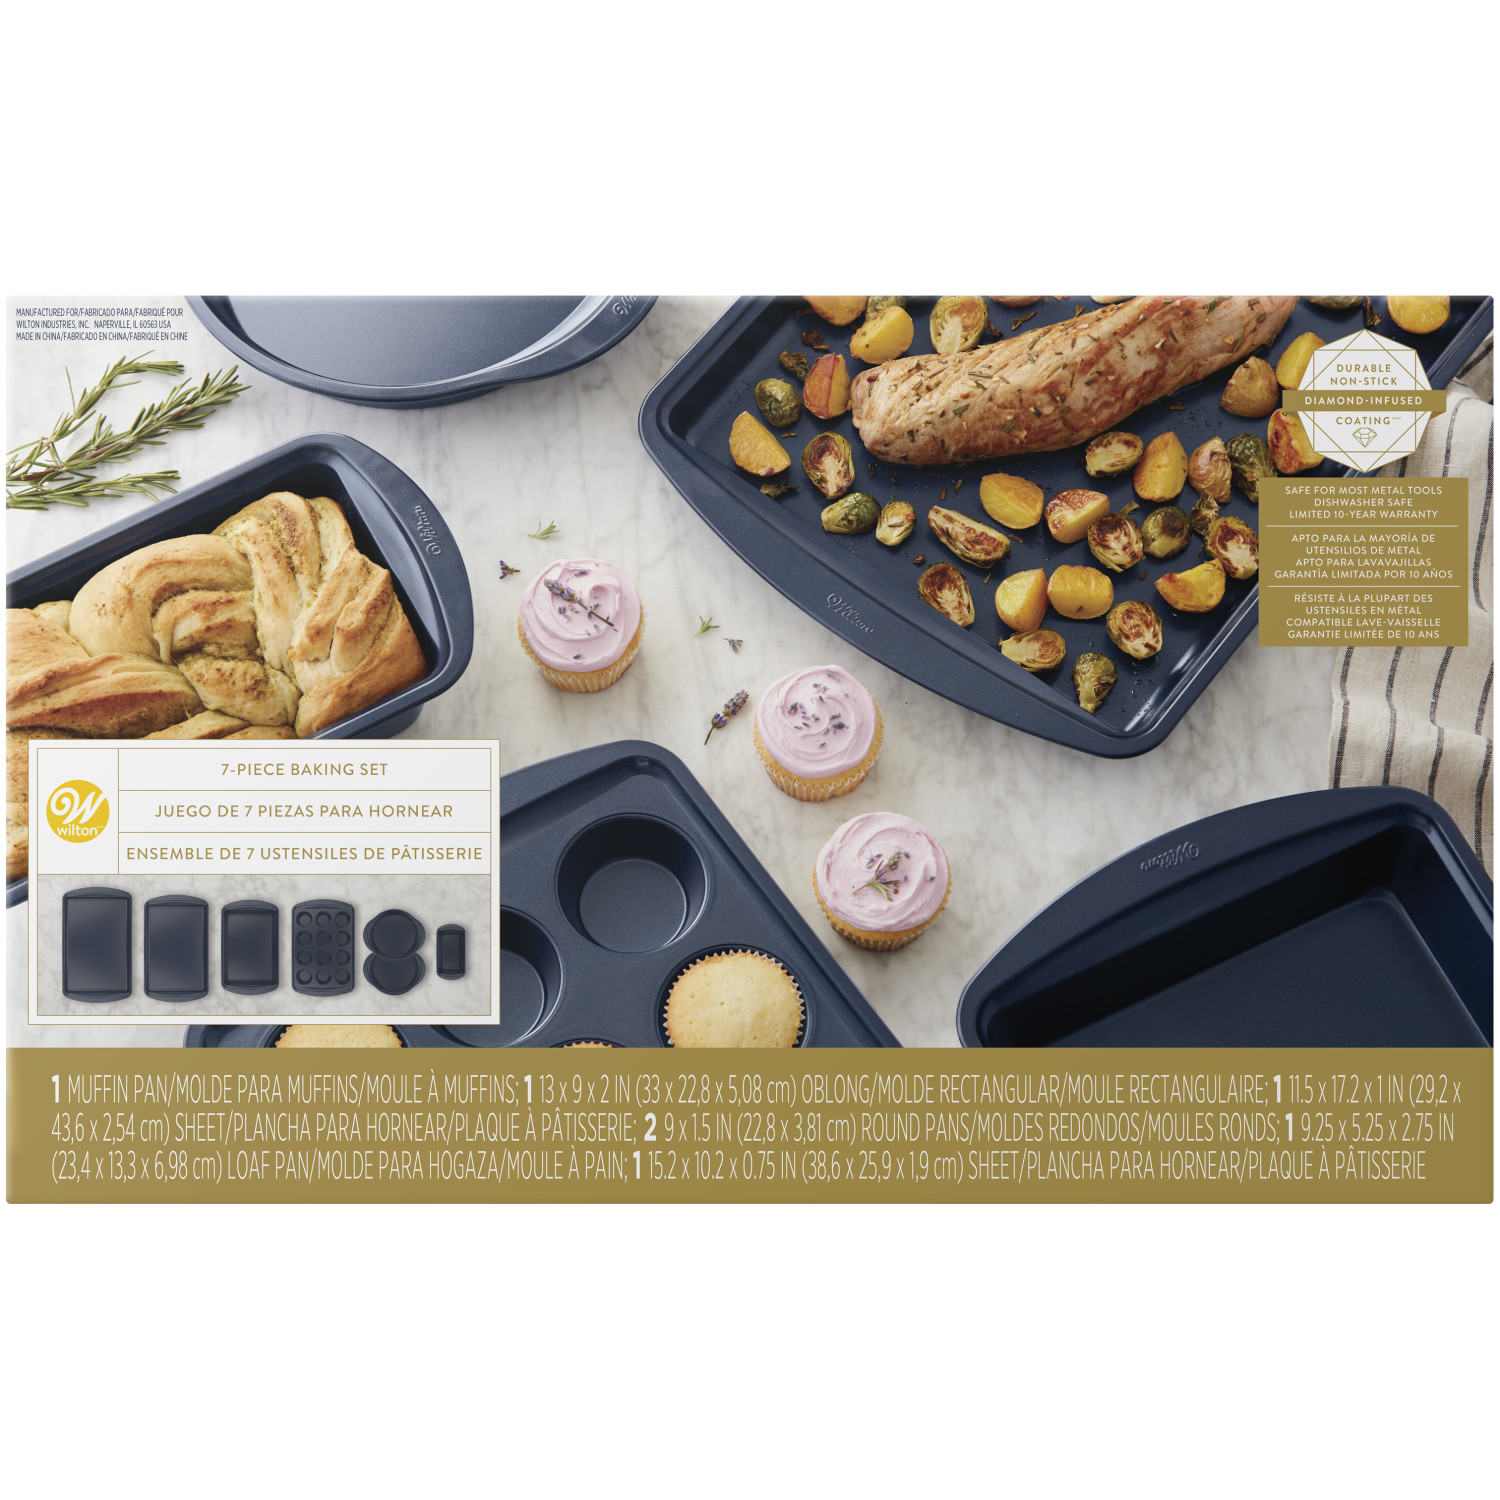 Wilton Diamond-Infused Non-Stick Medium Baking Sheet Bakeware Review -  Consumer Reports